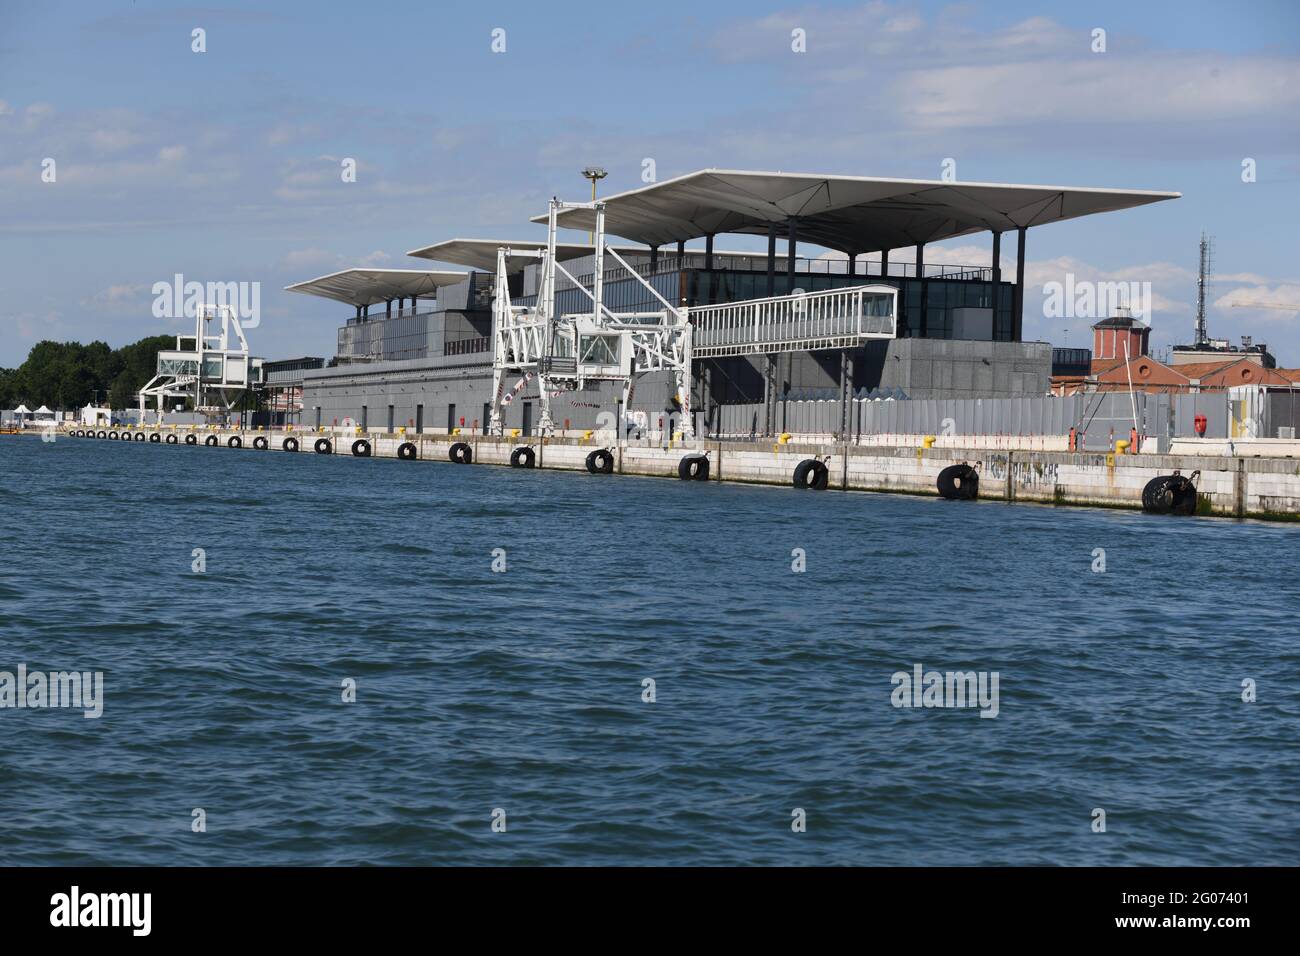 Porto delle navi da crociera Venezia - vuoto - lockdownbedingte leere Kreuzschiffsanlegestelle in Venedig Foto Stock